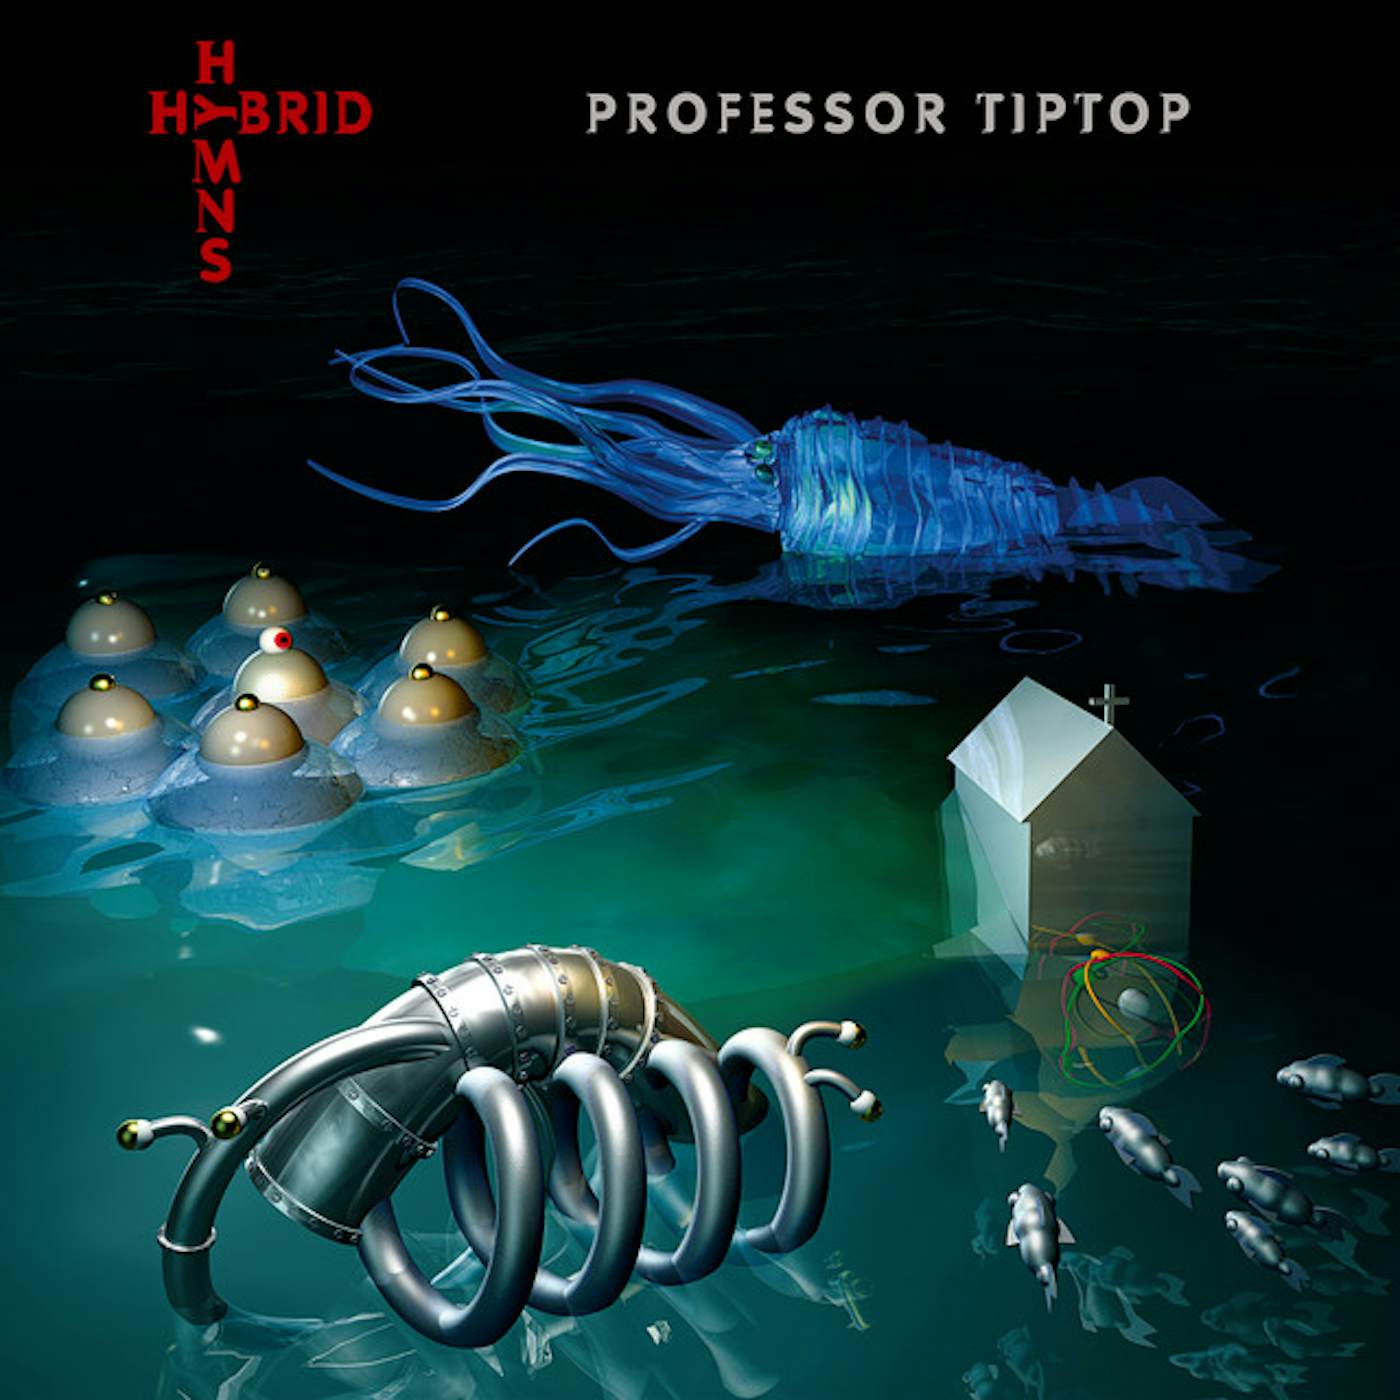 Professor Tip Top Hybrid Hymns Vinyl Record